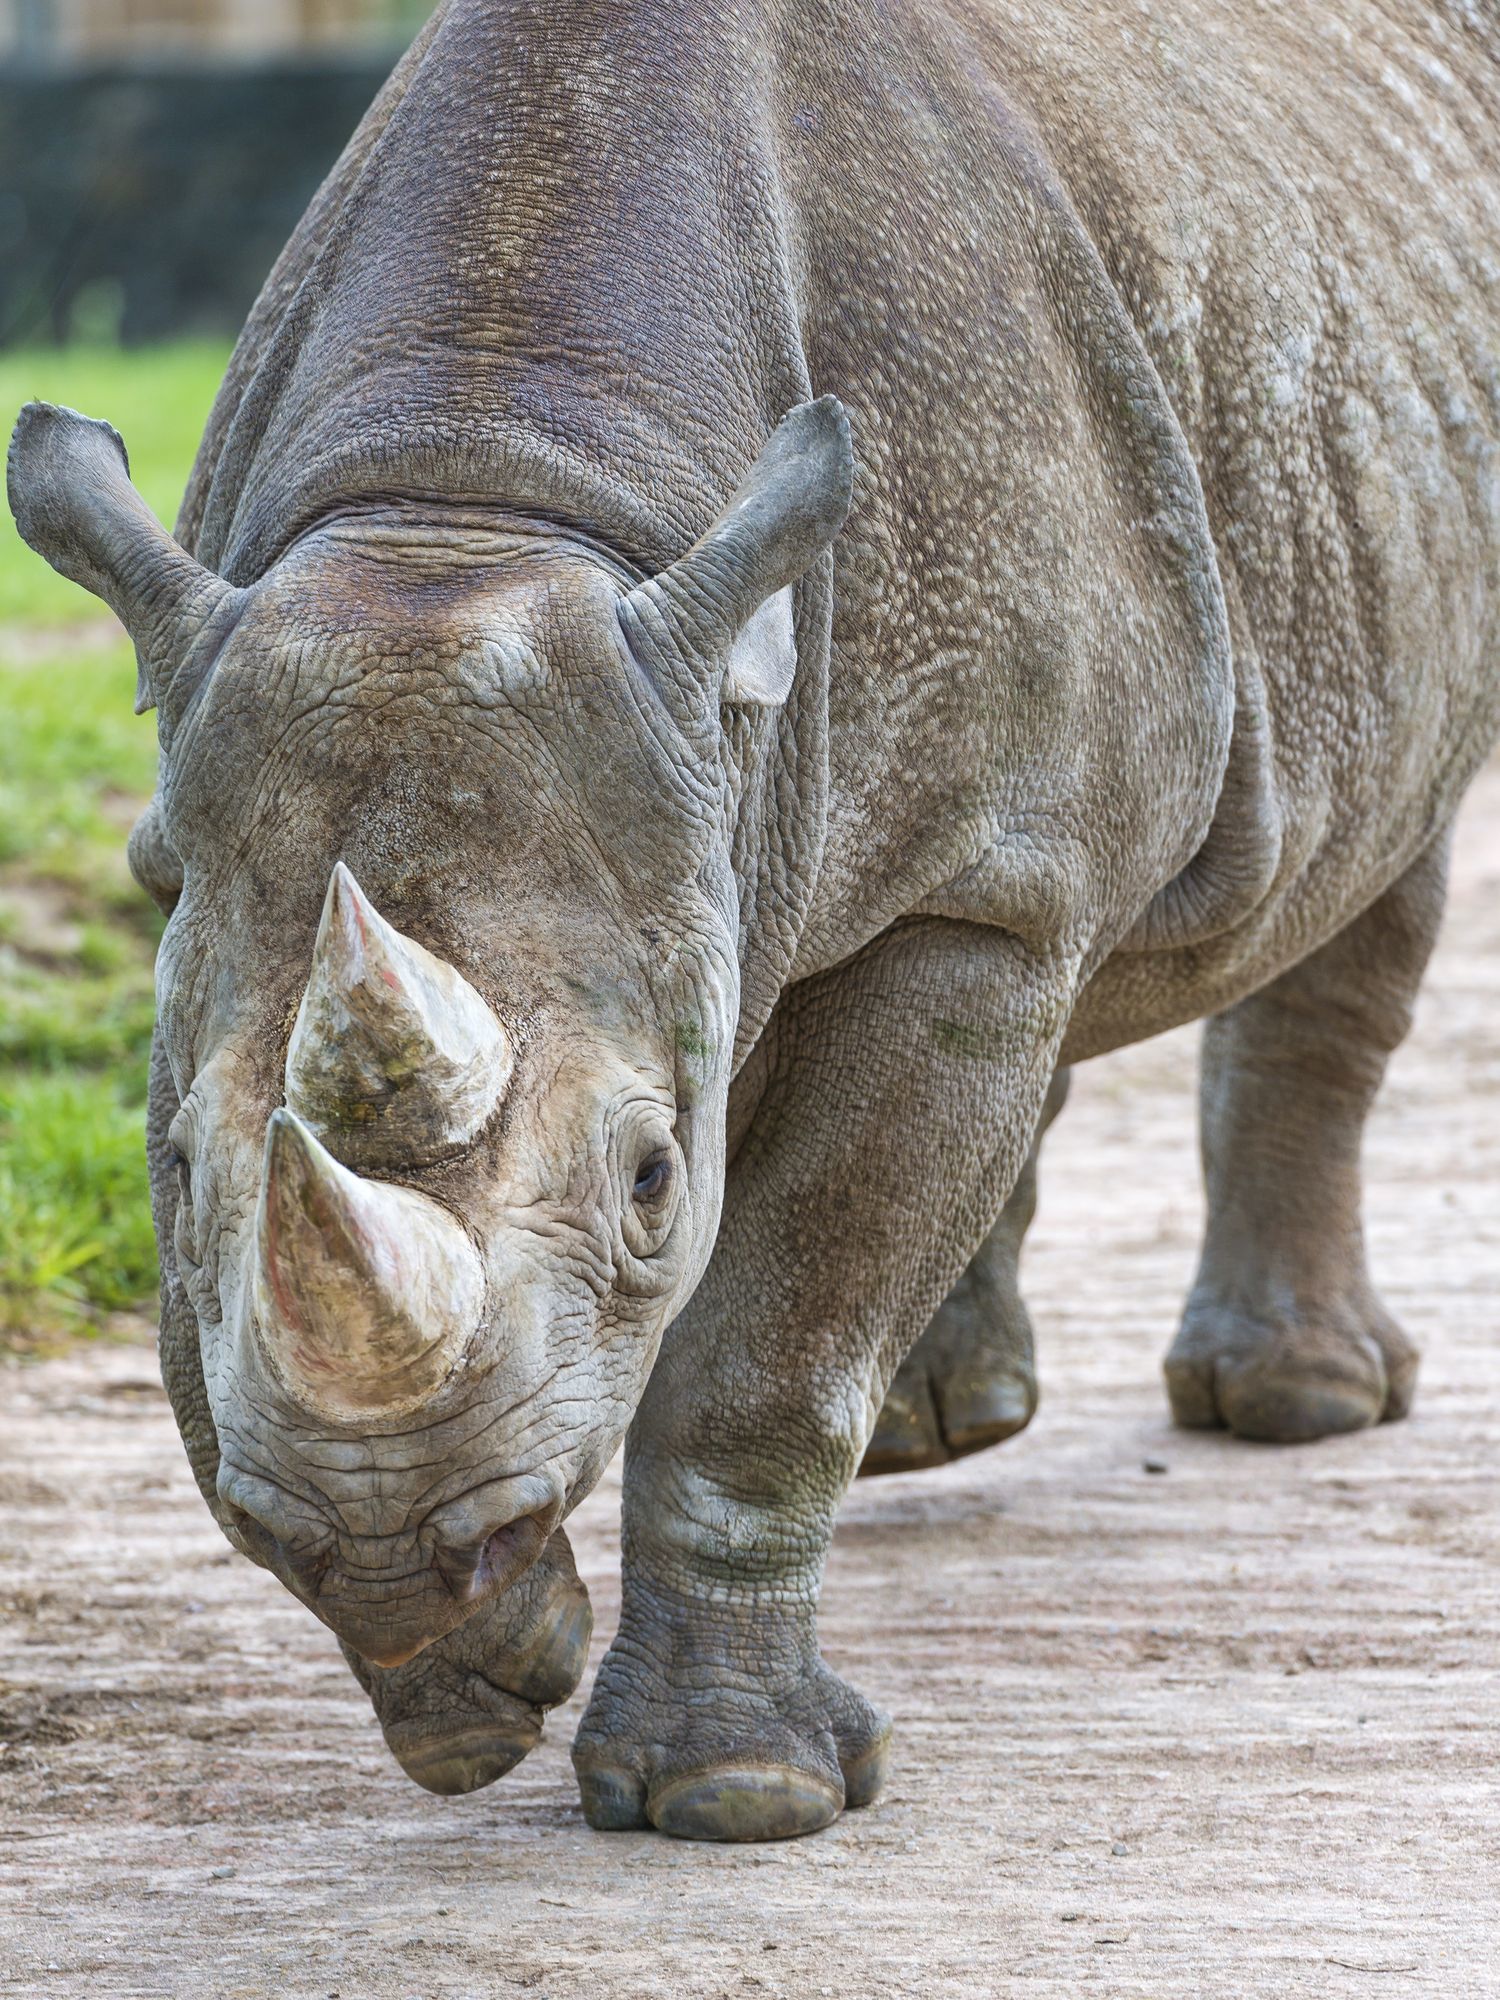 Rhinoceros - Rhinoceros, Wild animals, Zoo, The photo, Longpost